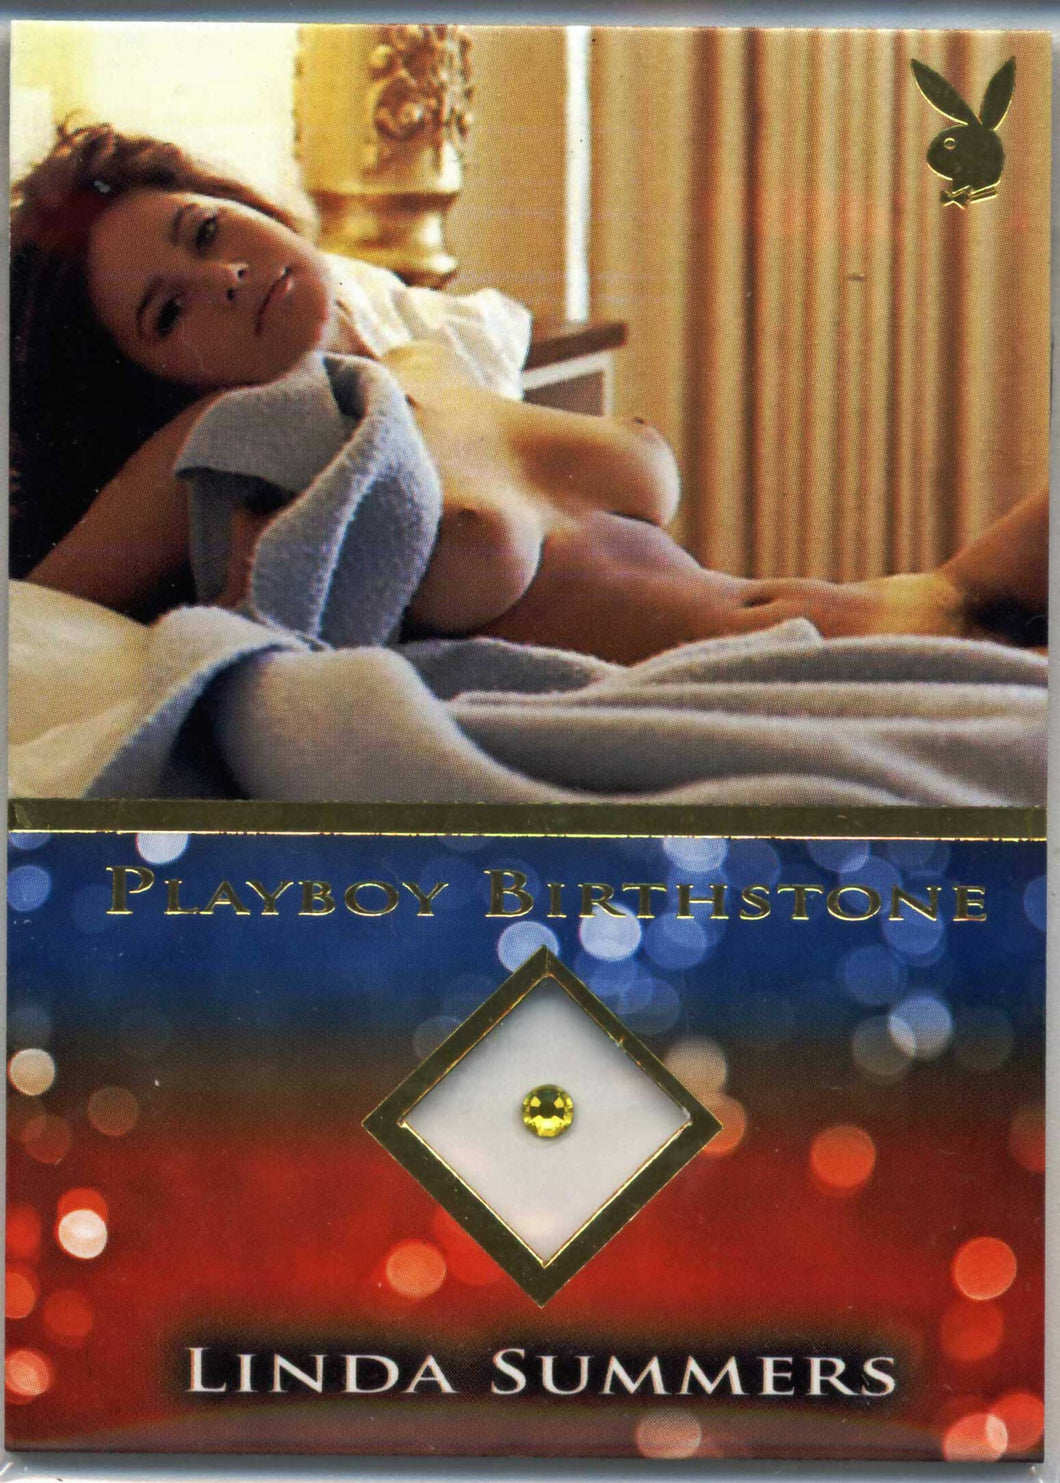 Playboy's Playmates In Paradise - Birthstone Card - Linda Summers